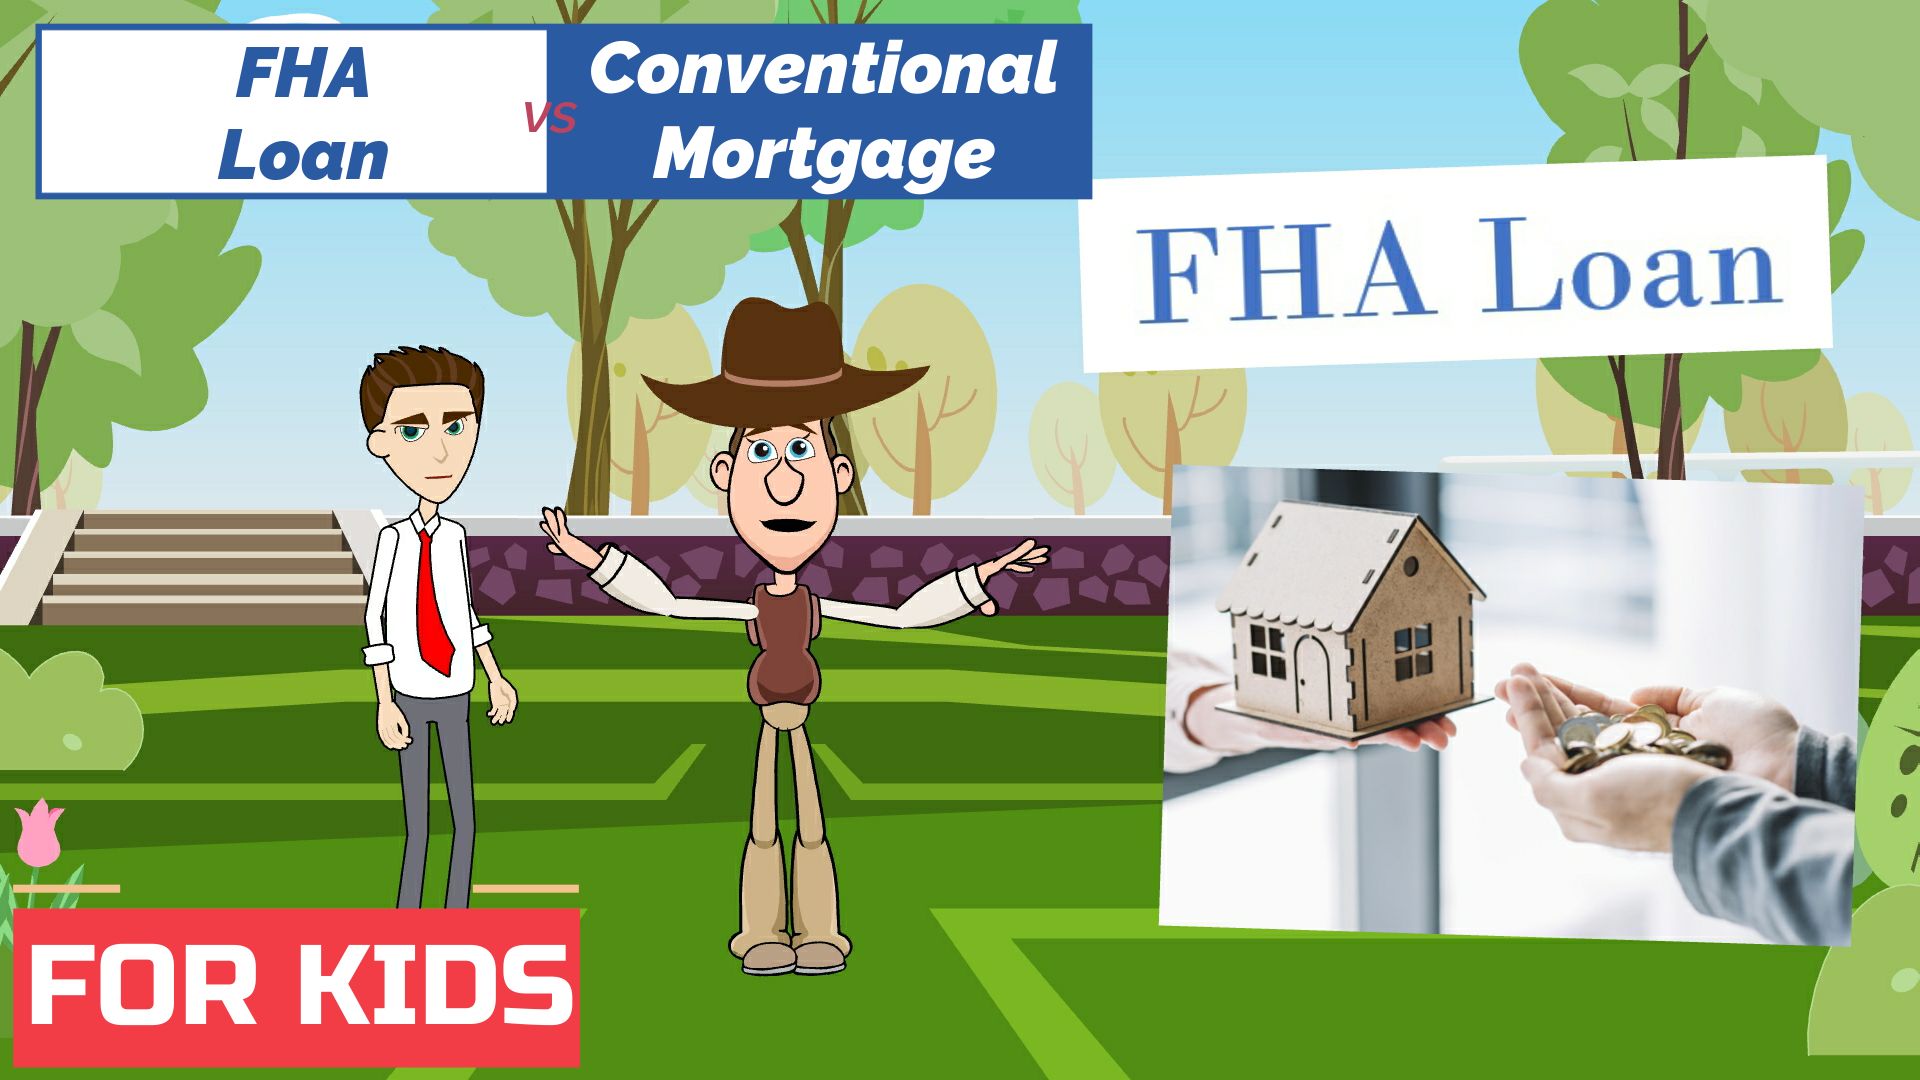 FHA Loan vs Conventional Mortgage